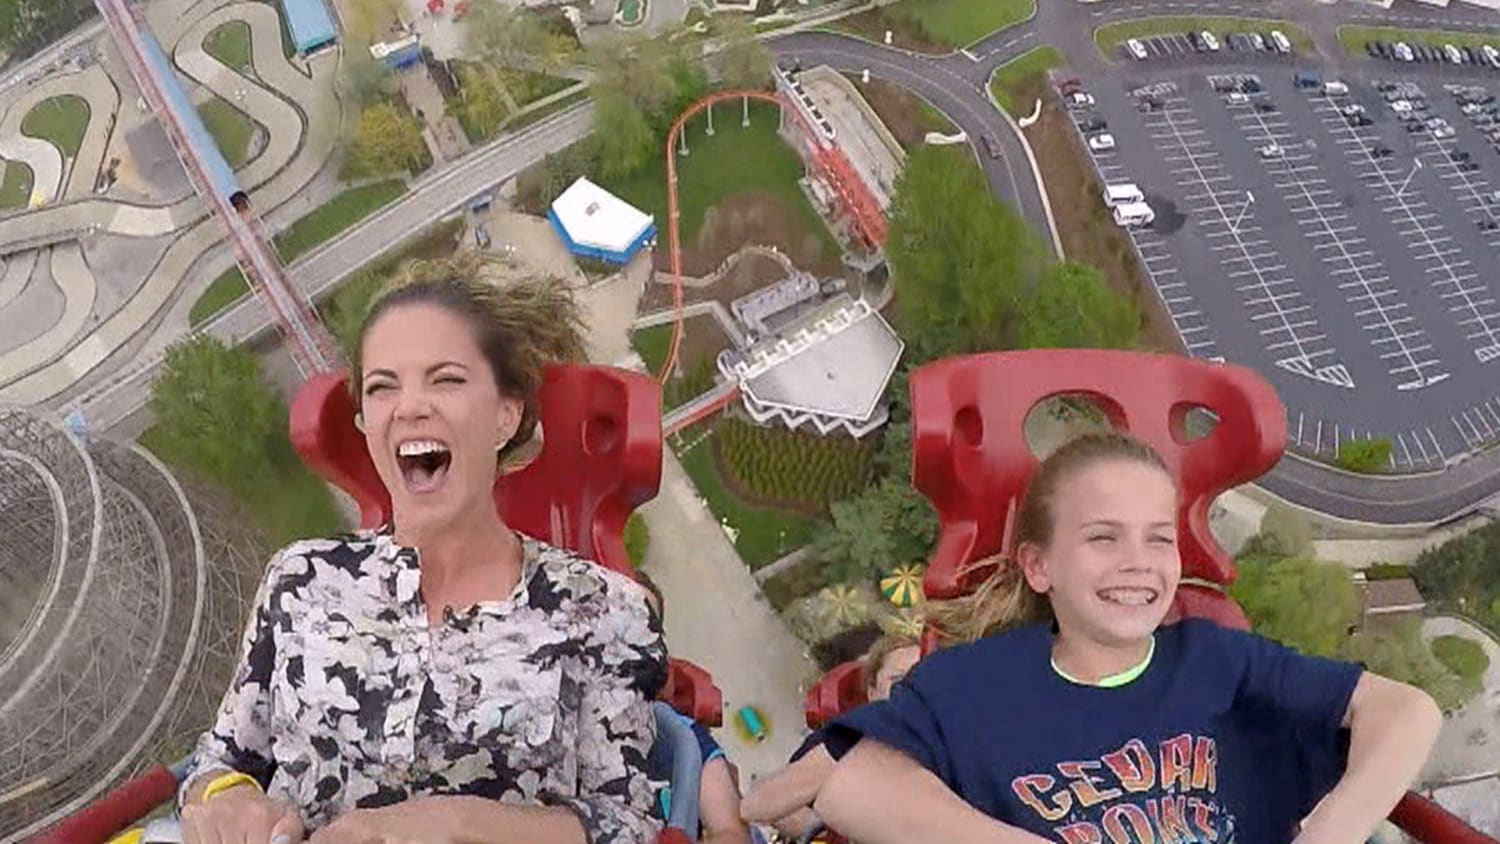 Jenna kicks back while Natalie soars, screams on giant roller coaster ride.